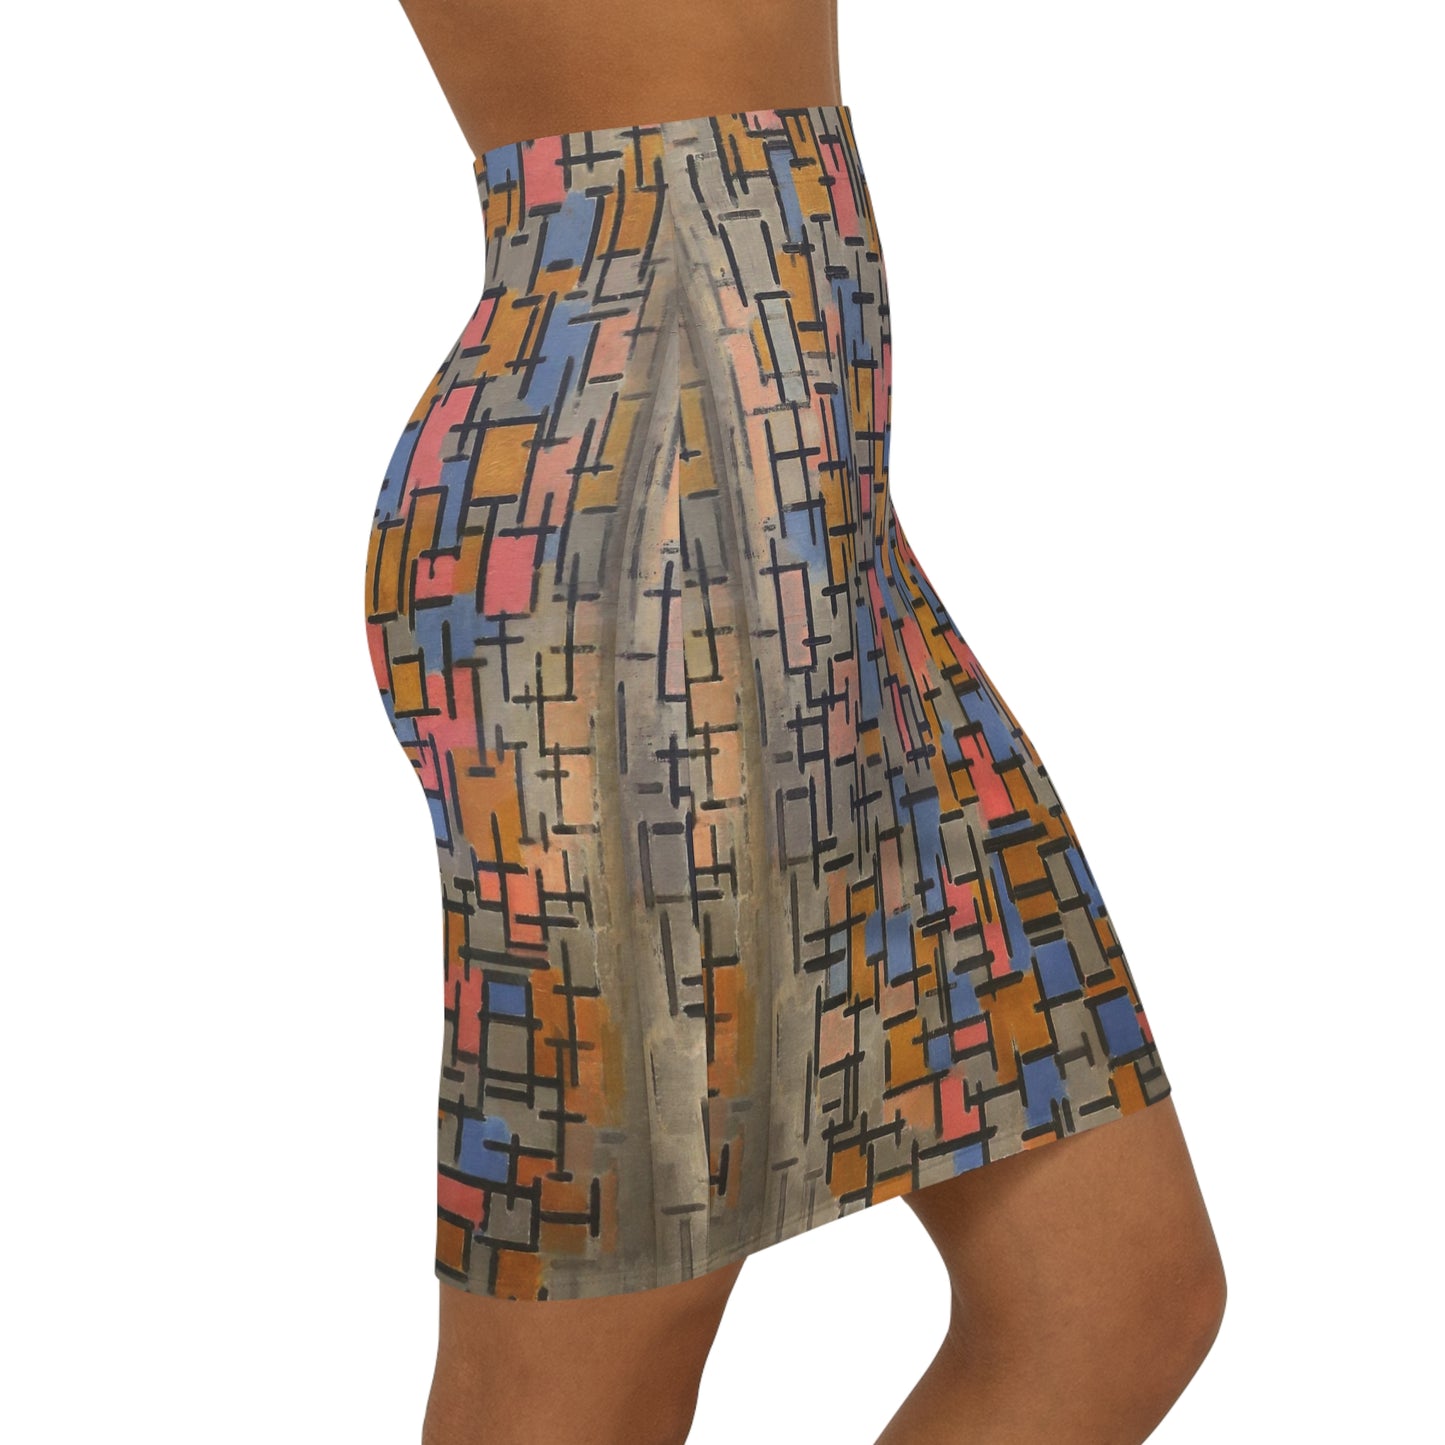 Piet Mondrian skirt